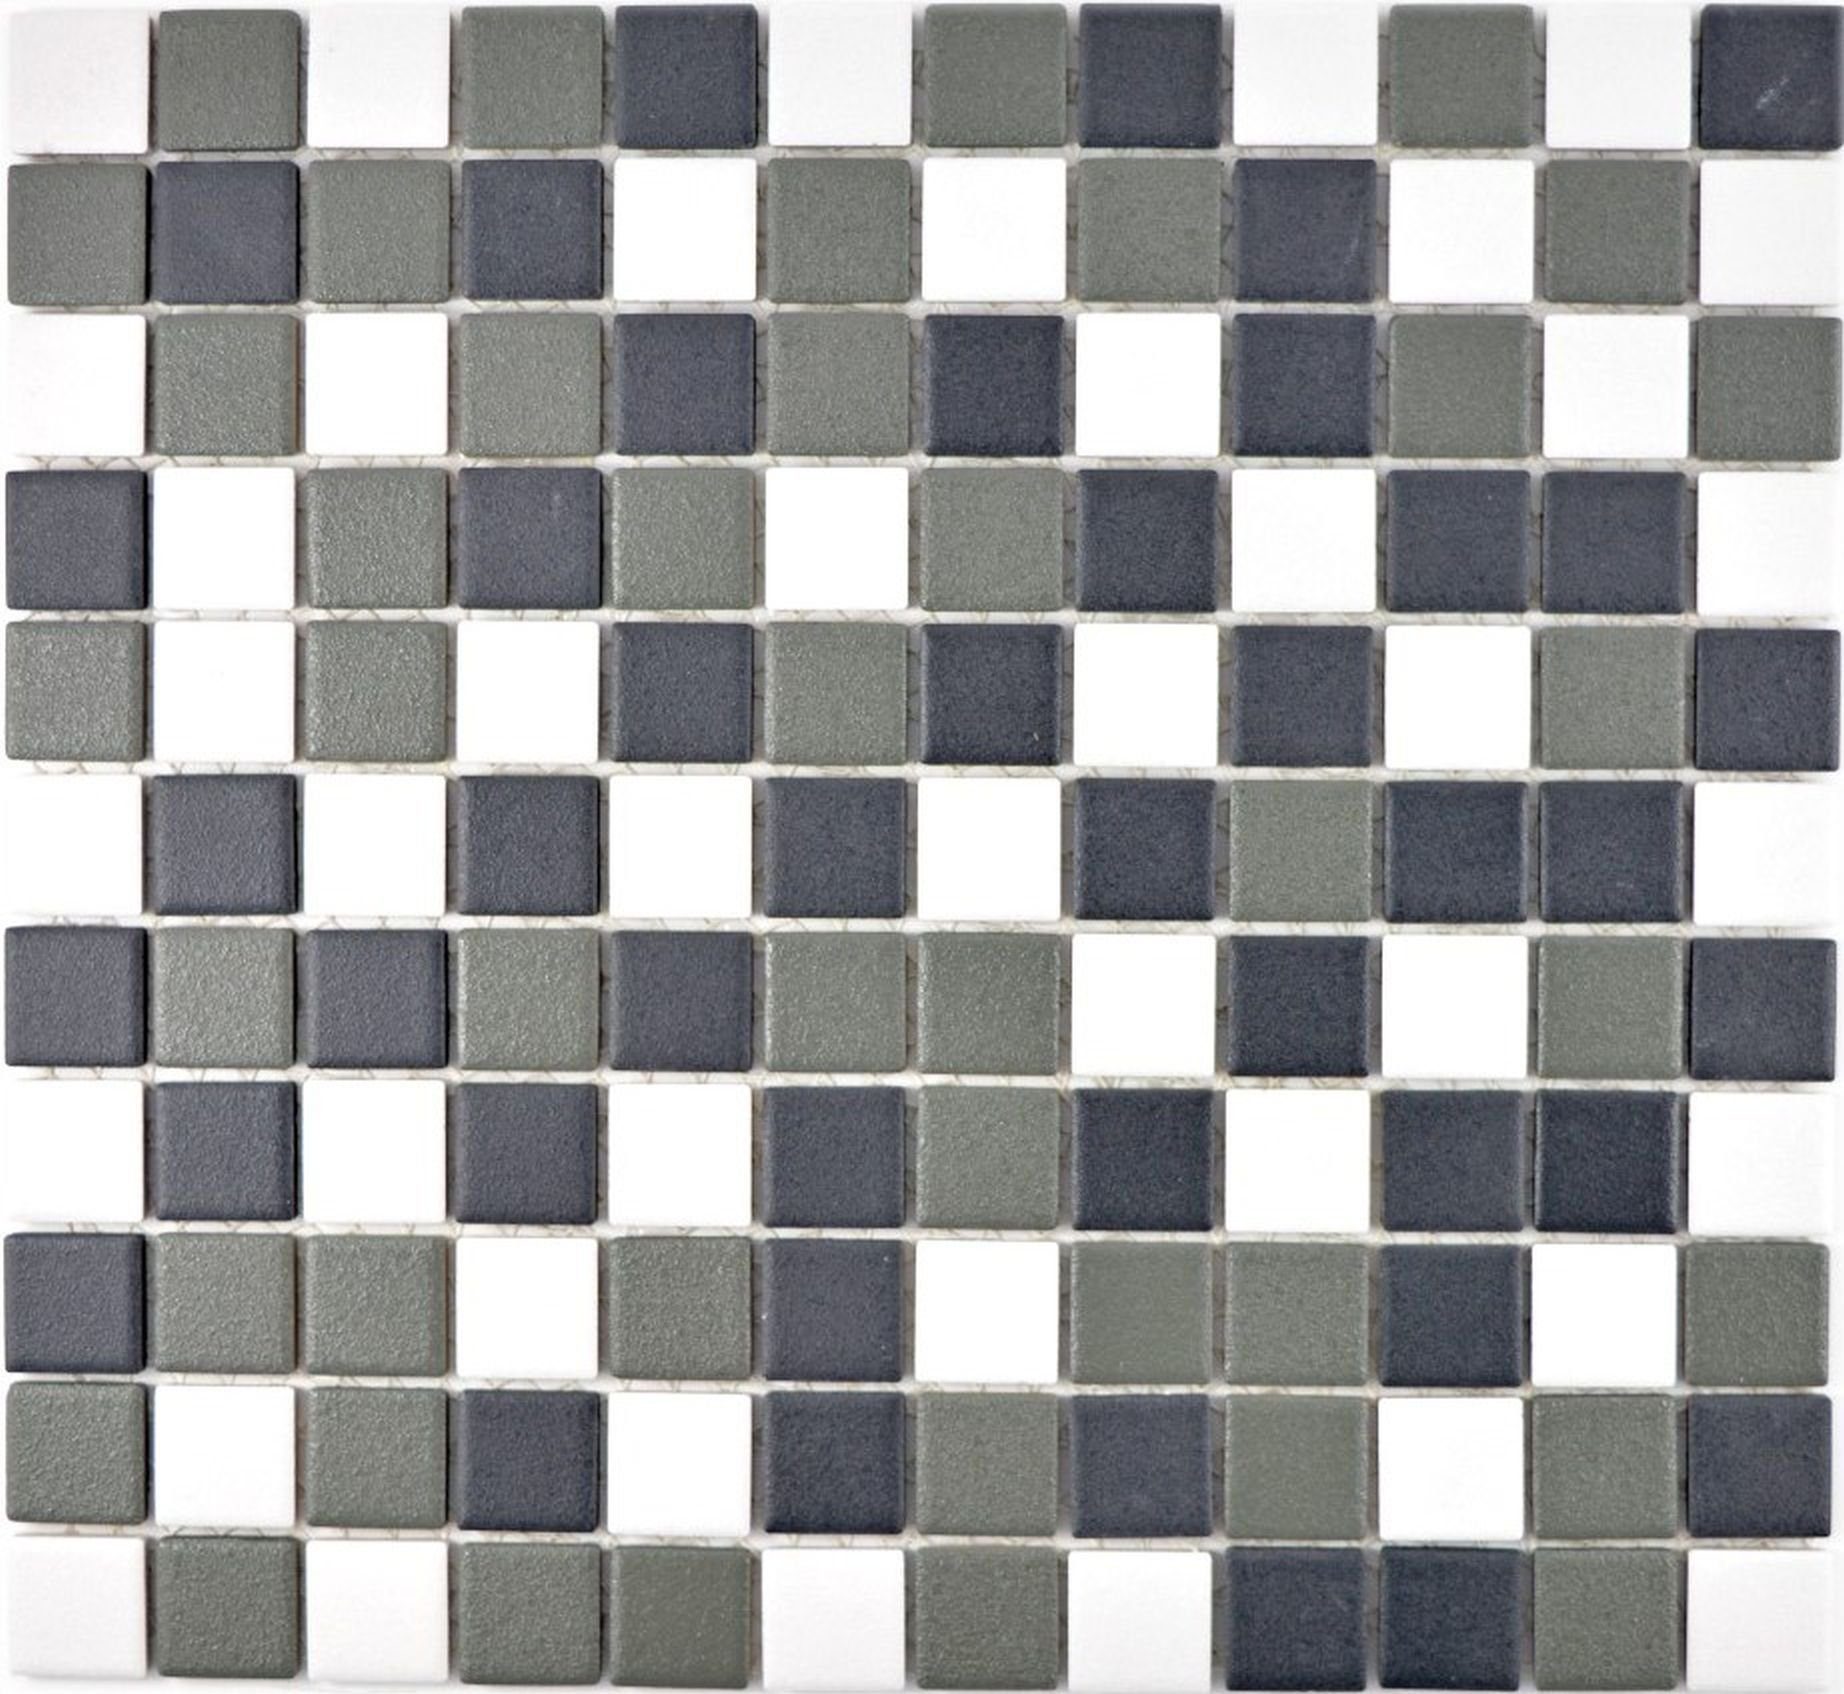 Mosani Mosaikfliesen Keramik Mosaik schwarz weiß anthrazit matt RUTSCHSICHER RUTSCHHEMMEND